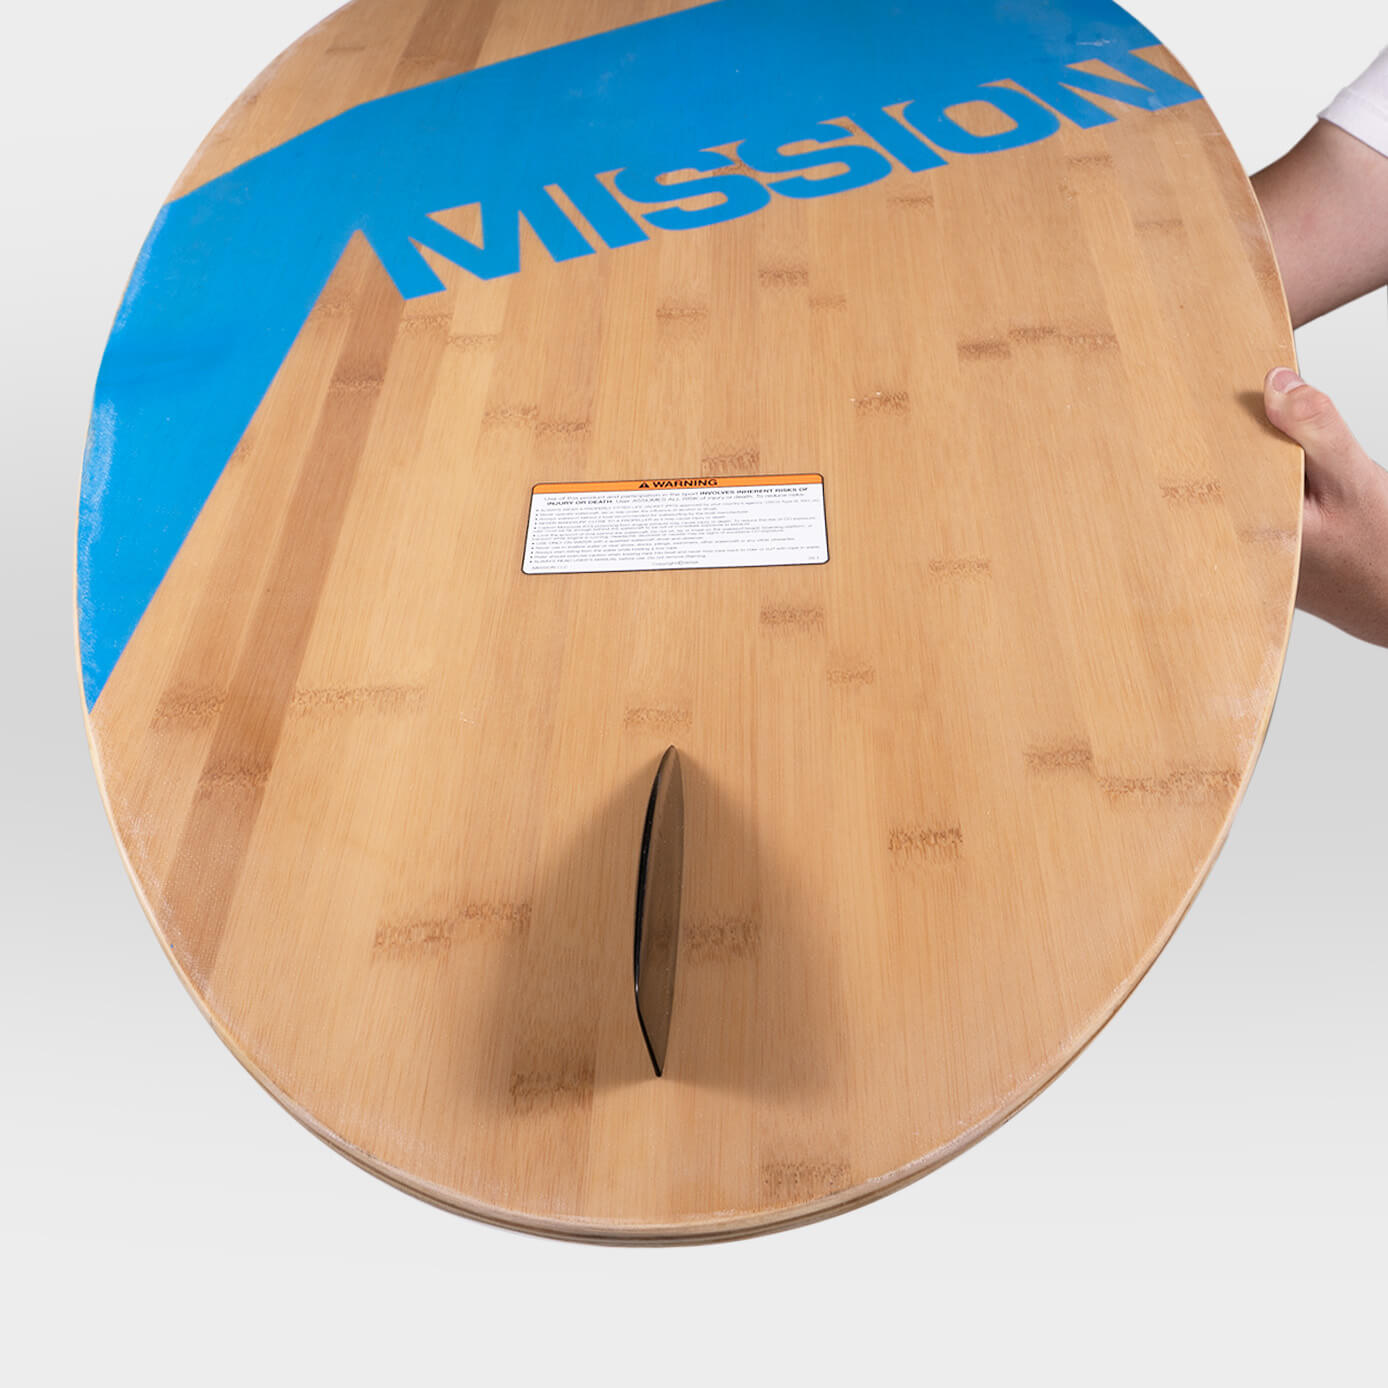 B-Stock | CHARLIE 2.0 Skim-Style Wakesurfer | MISSION Wakesurf Boards